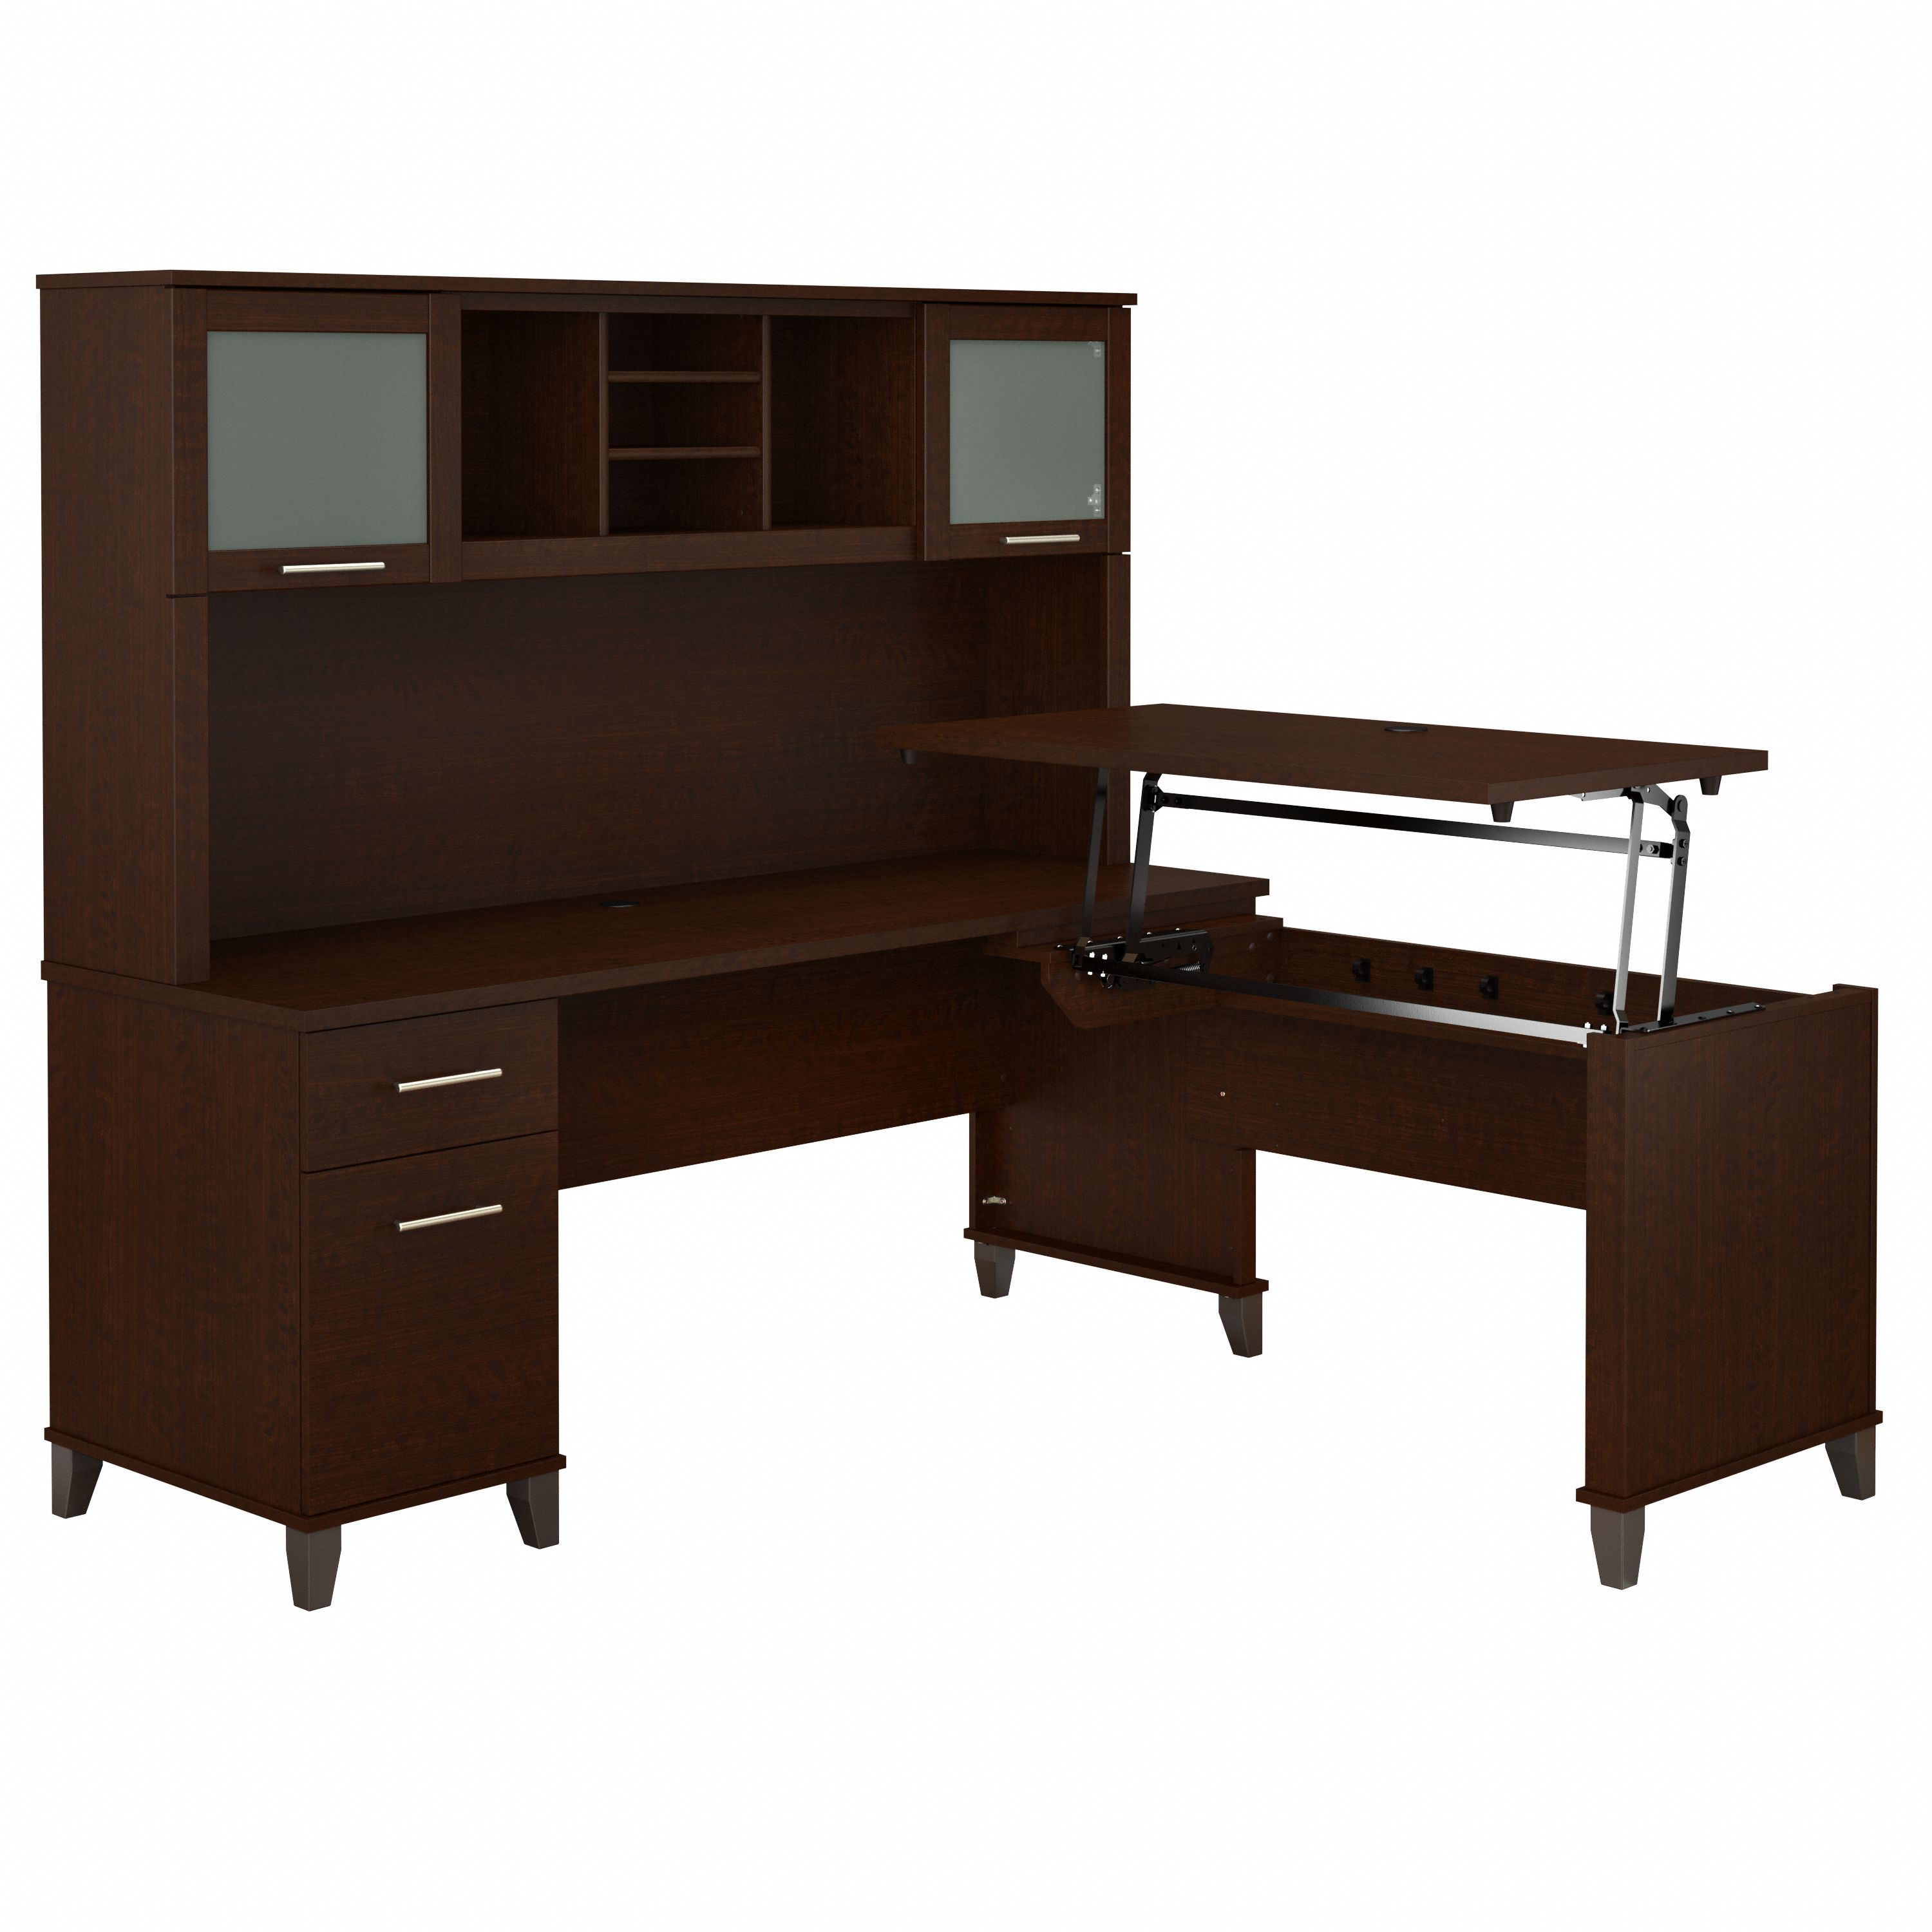 Shop Bush Furniture Somerset 72W 3 Position Sit to Stand L Shaped Desk with Hutch 02 SET015MR #color_mocha cherry